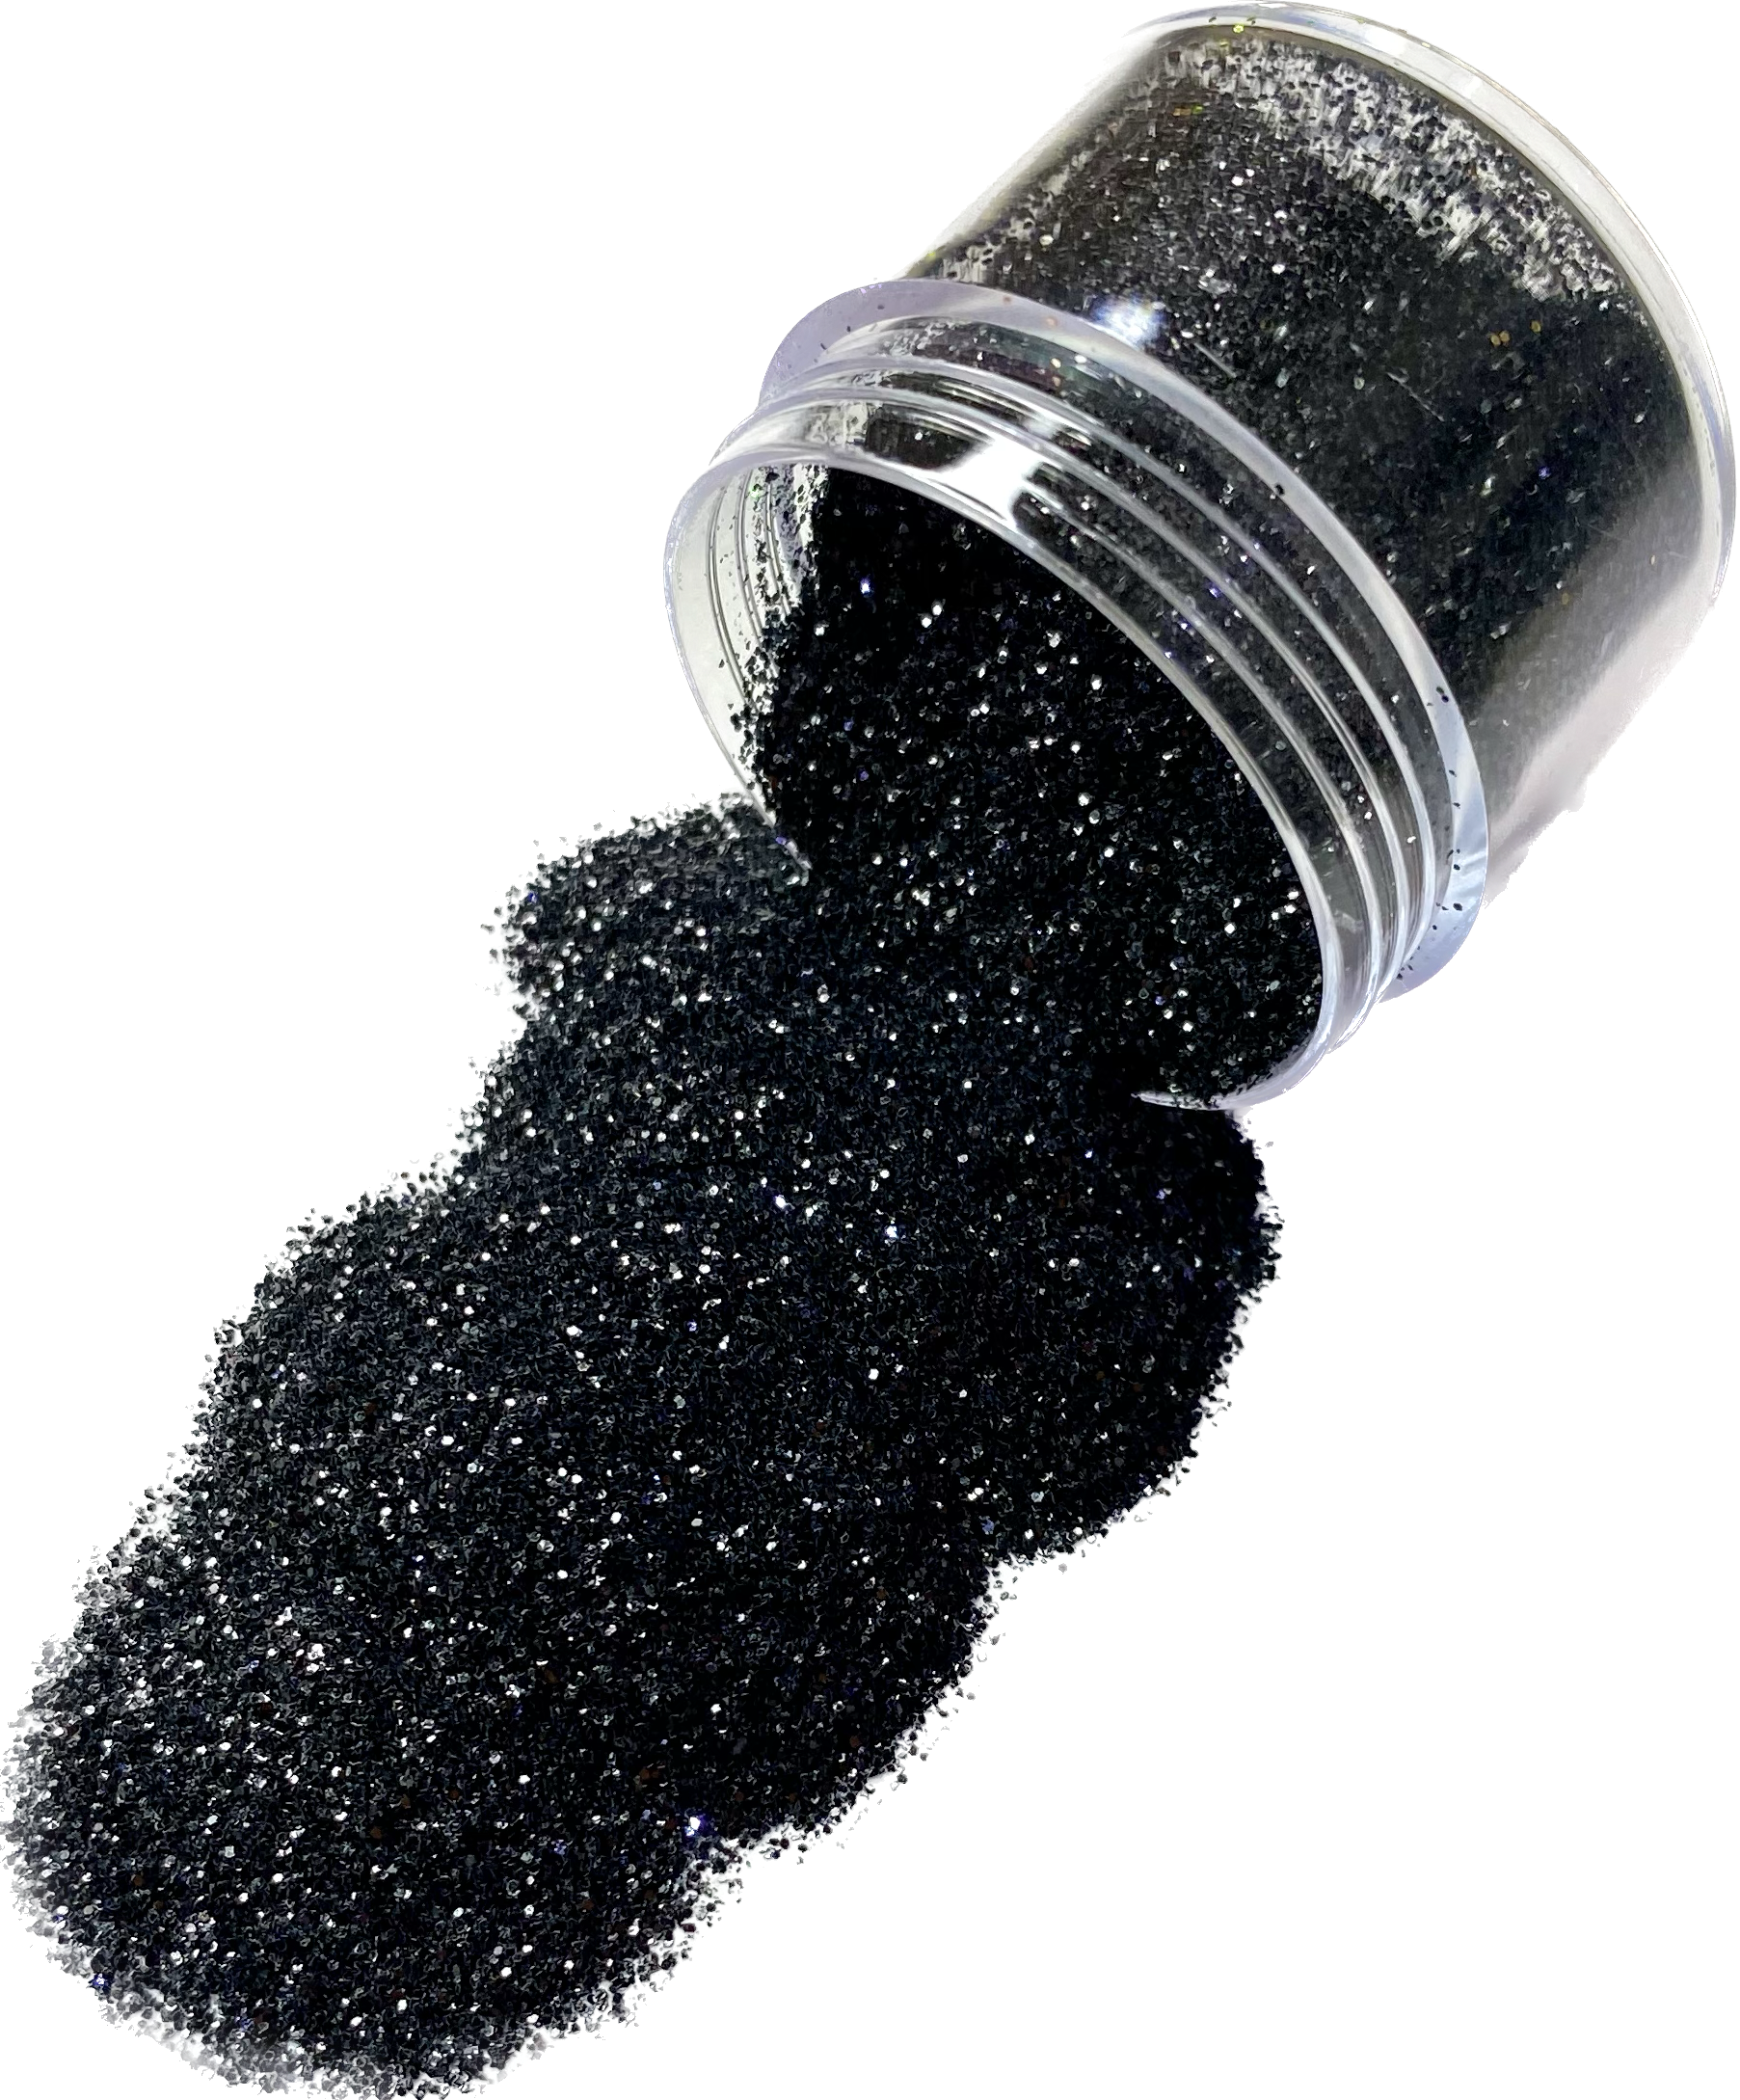 Navy Glitter .015 hex poly glitter, affordable Navy Neptune glitter fo –  GlitterGiftsAndMore